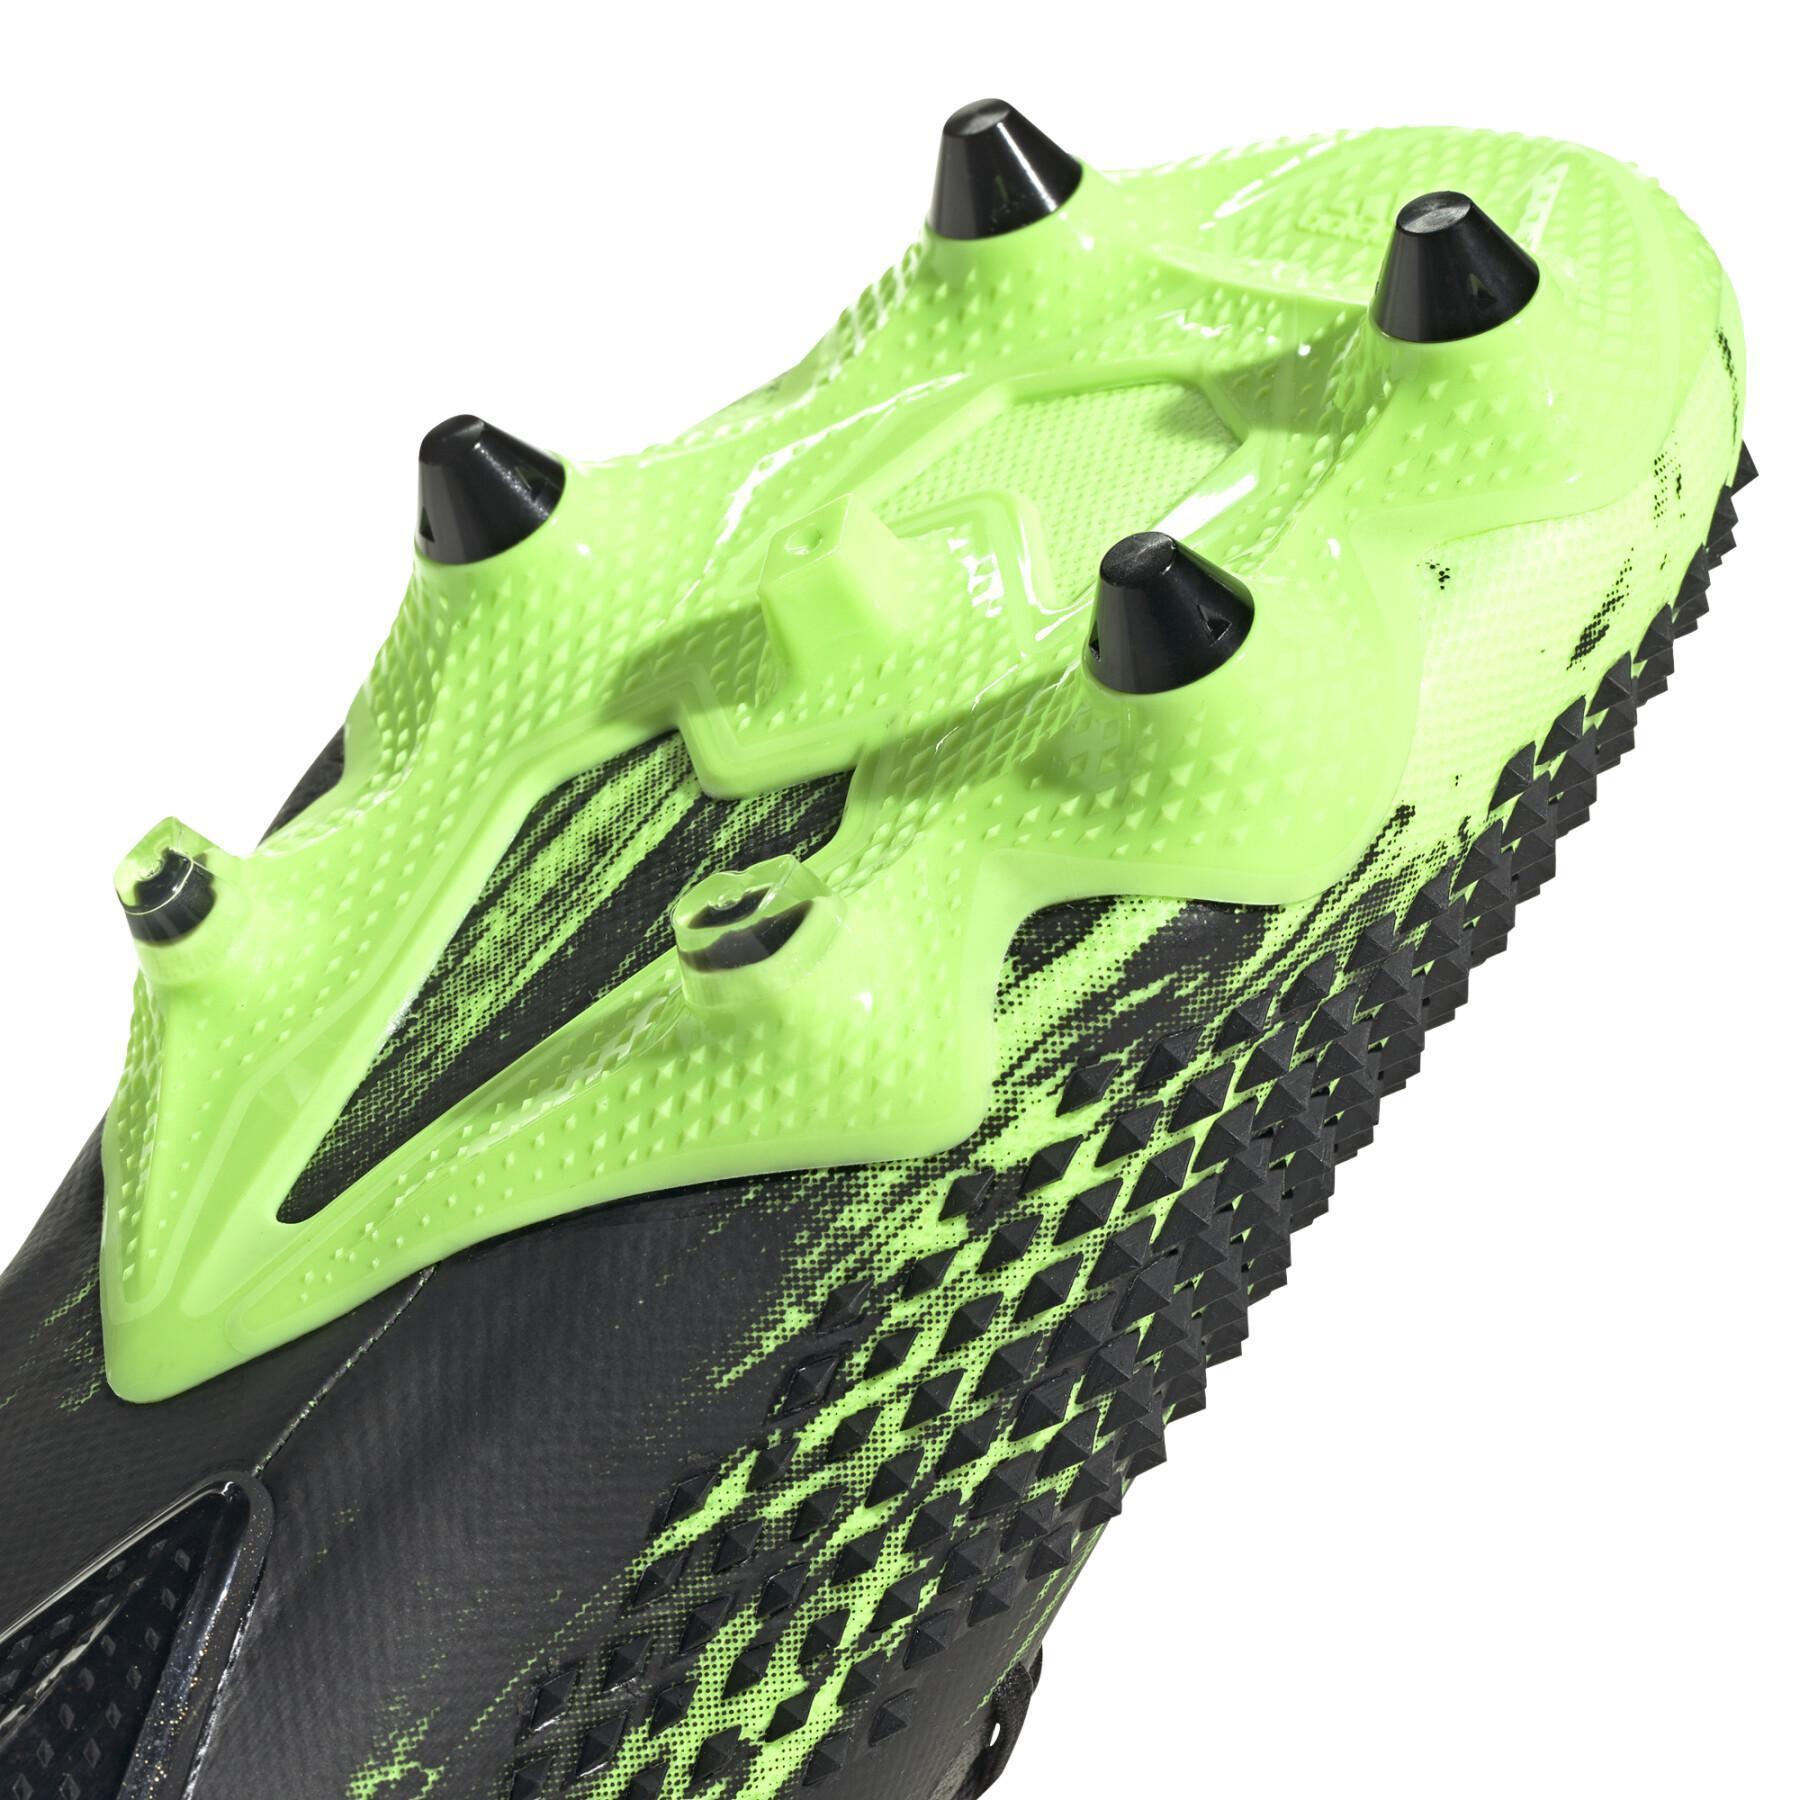 Chaussures de football adidas Predator Mutator 20.1 Low SG